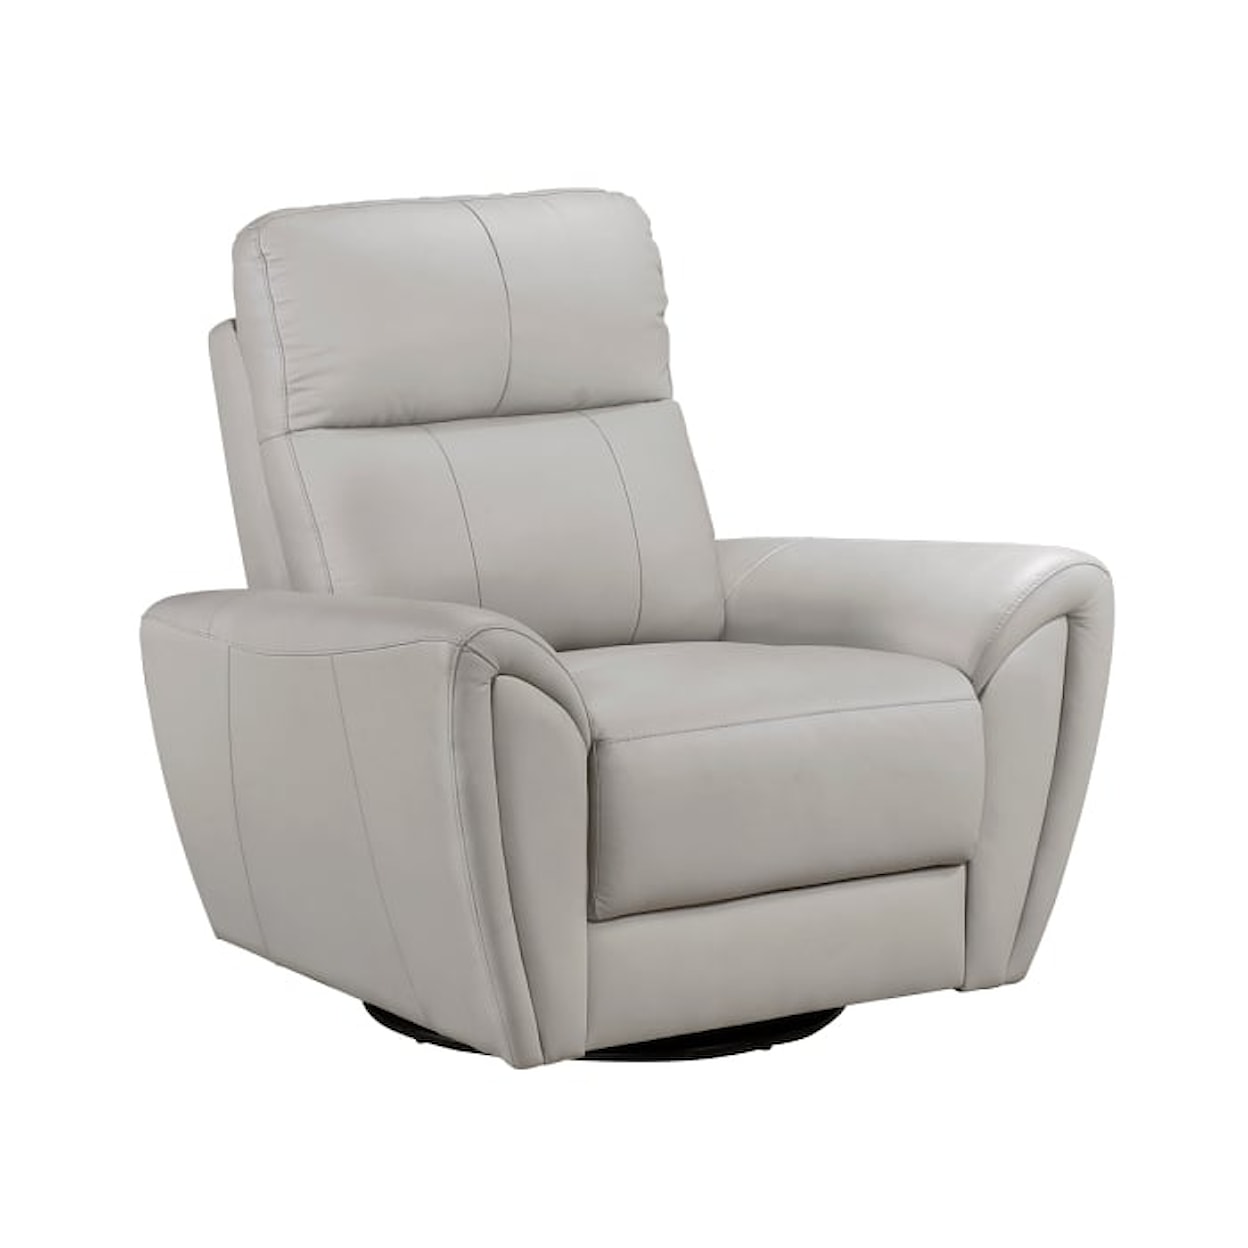 Homelegance Furniture Essex Swivel Glider Chair